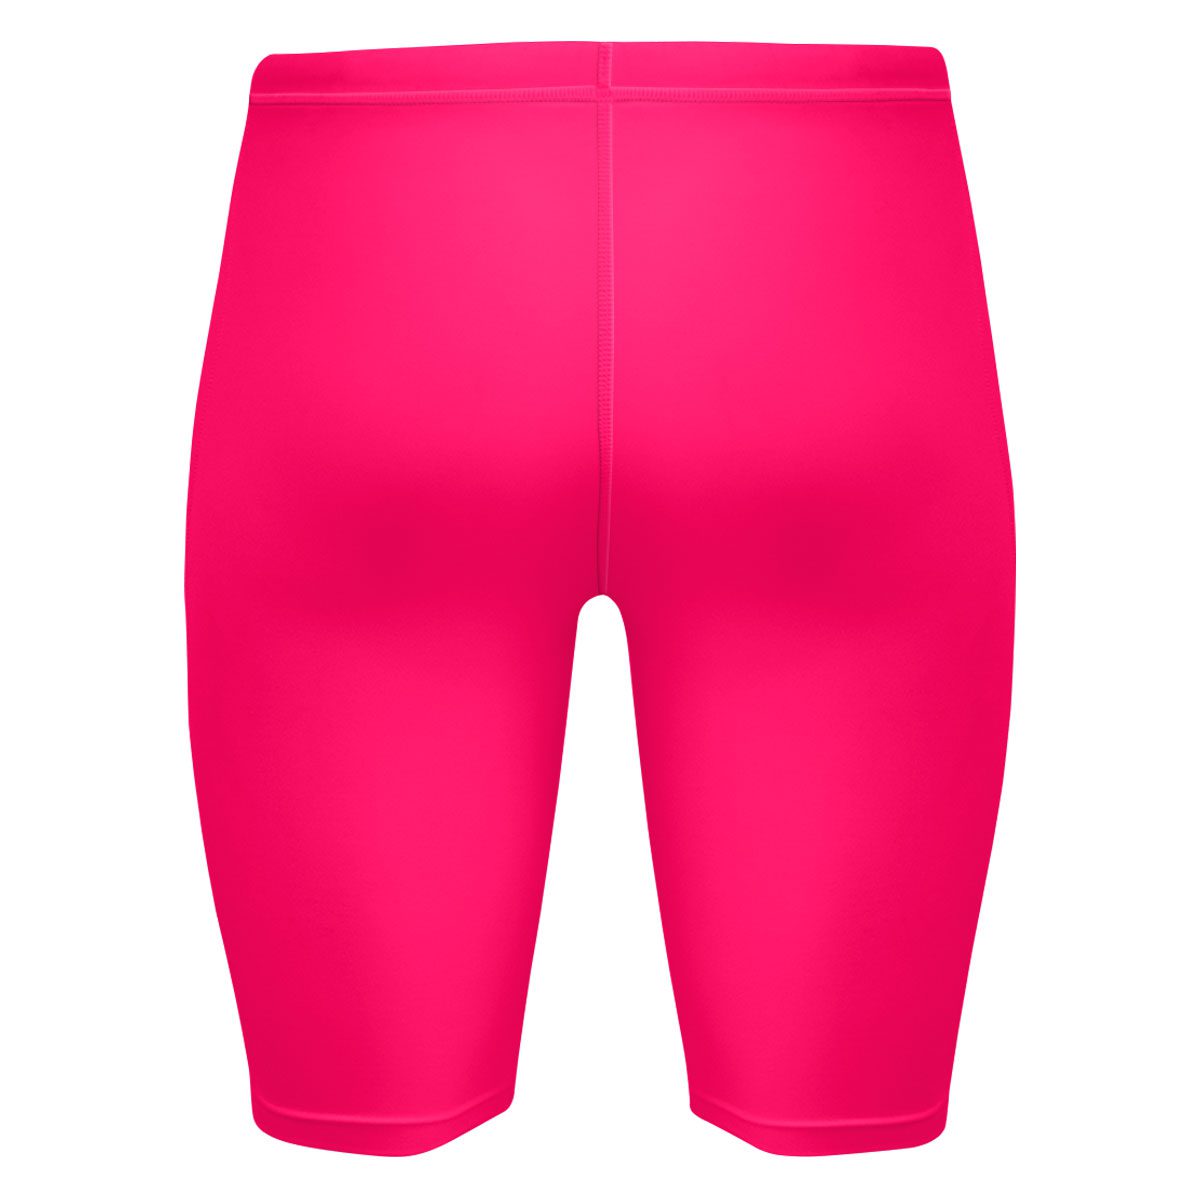 Mens Compression Shorts - Pink - Blackchrome